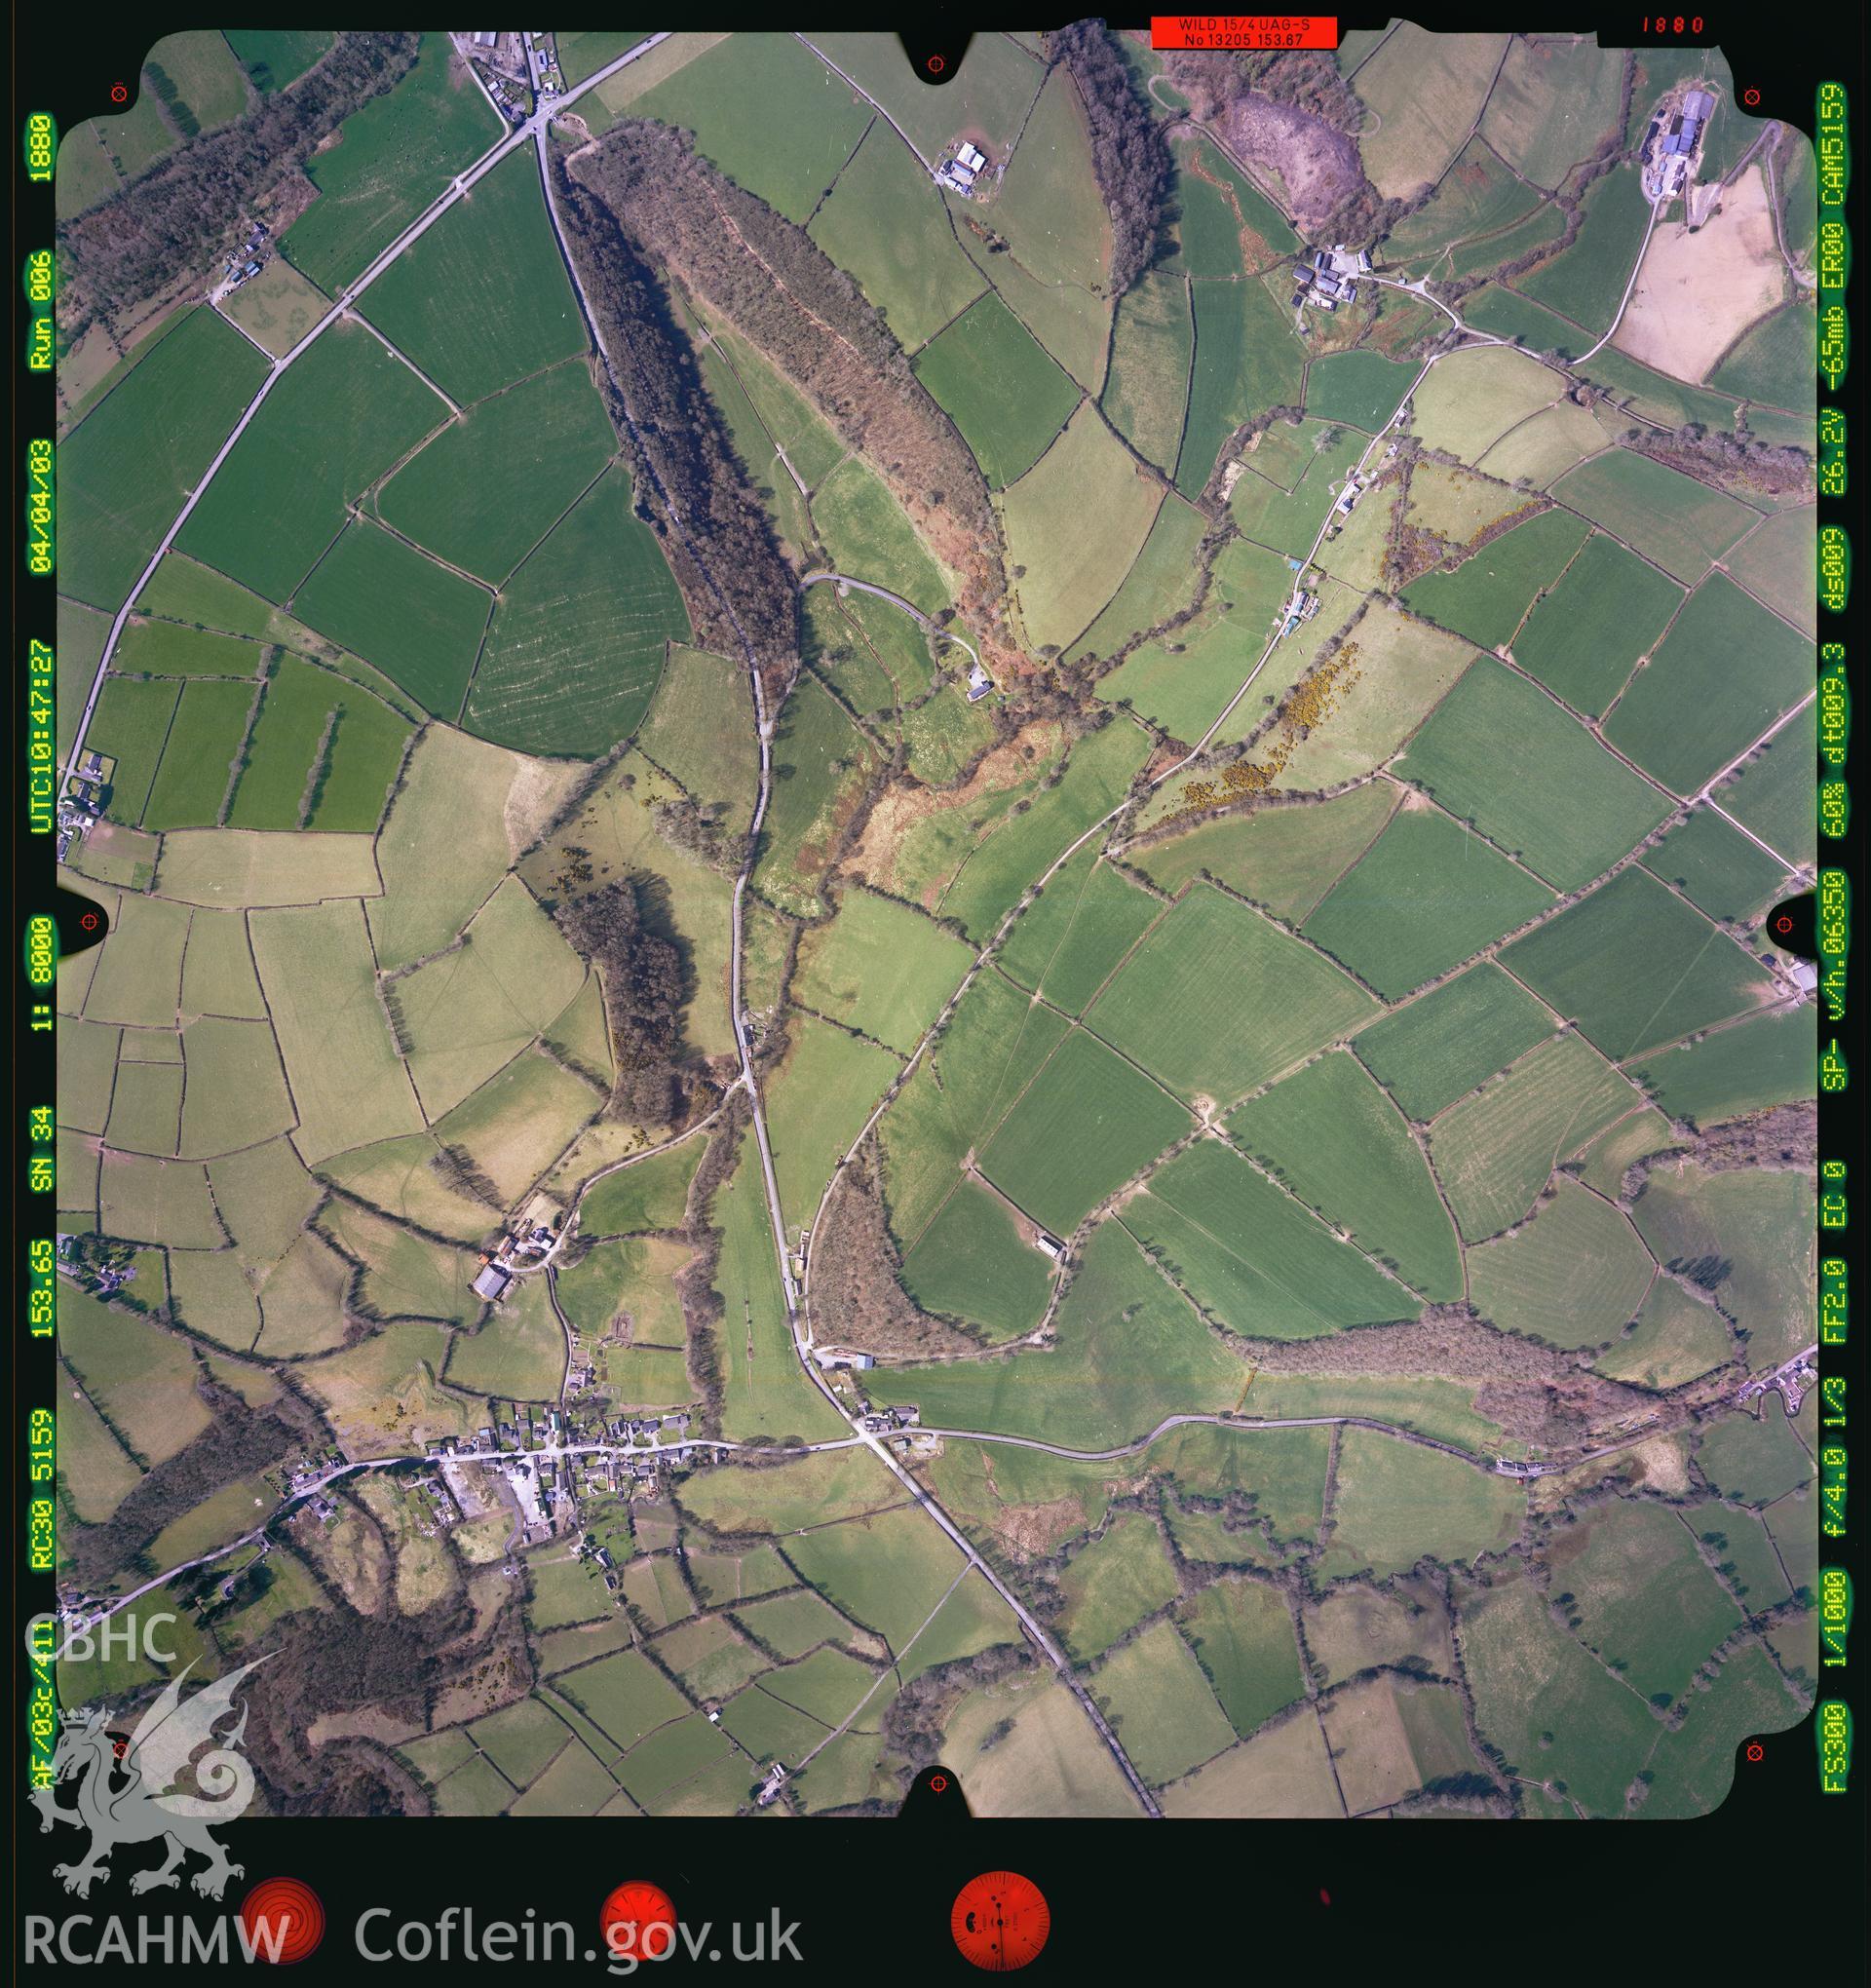 Digitized copy of a colour aerial photograph showing the Llandysul area, taken by Ordnance Survey, 2003.